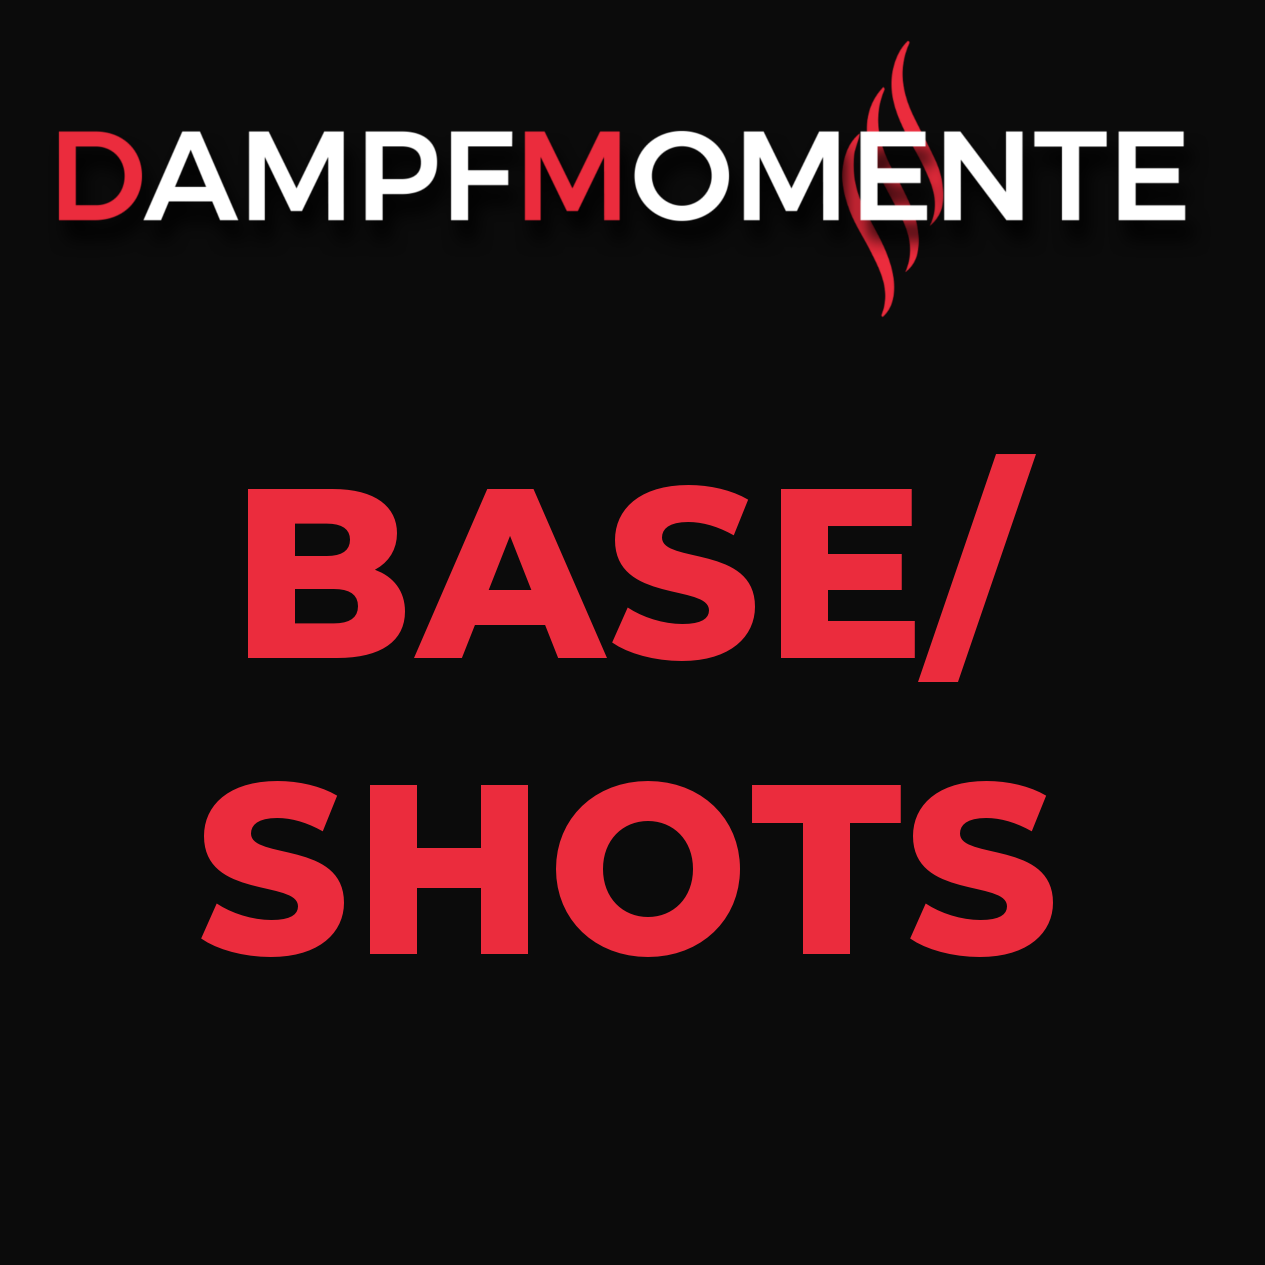 Base/Shots